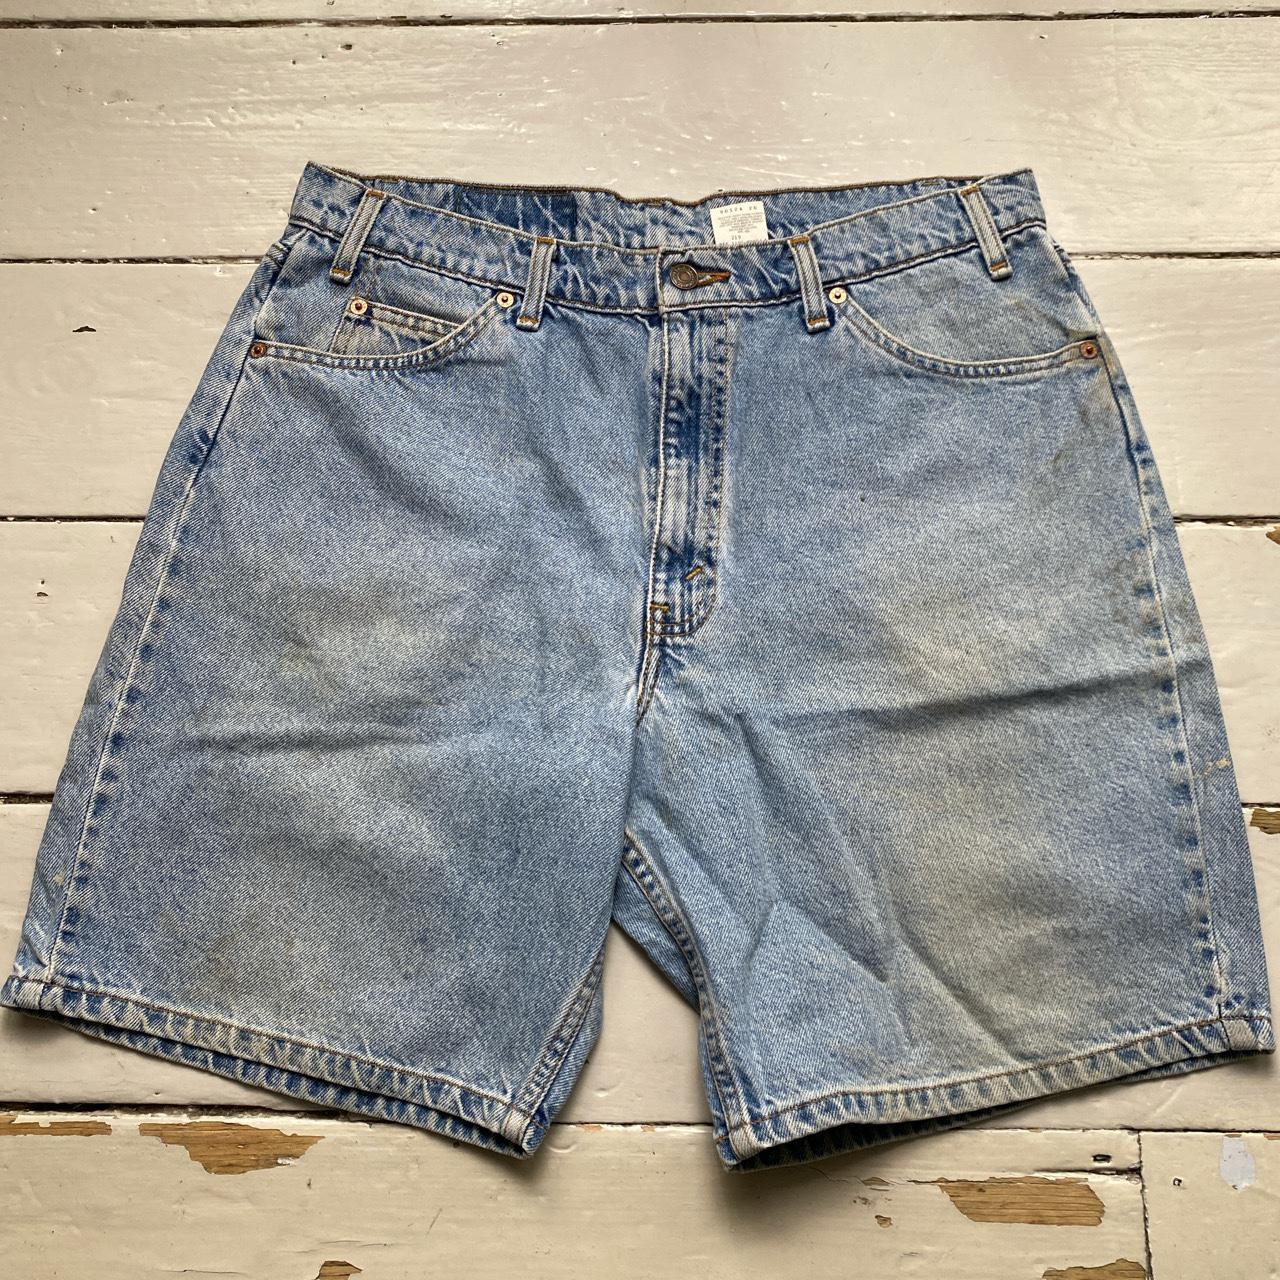 Levis 550 Vintage Baggy Light Blue Jean Short Jorts